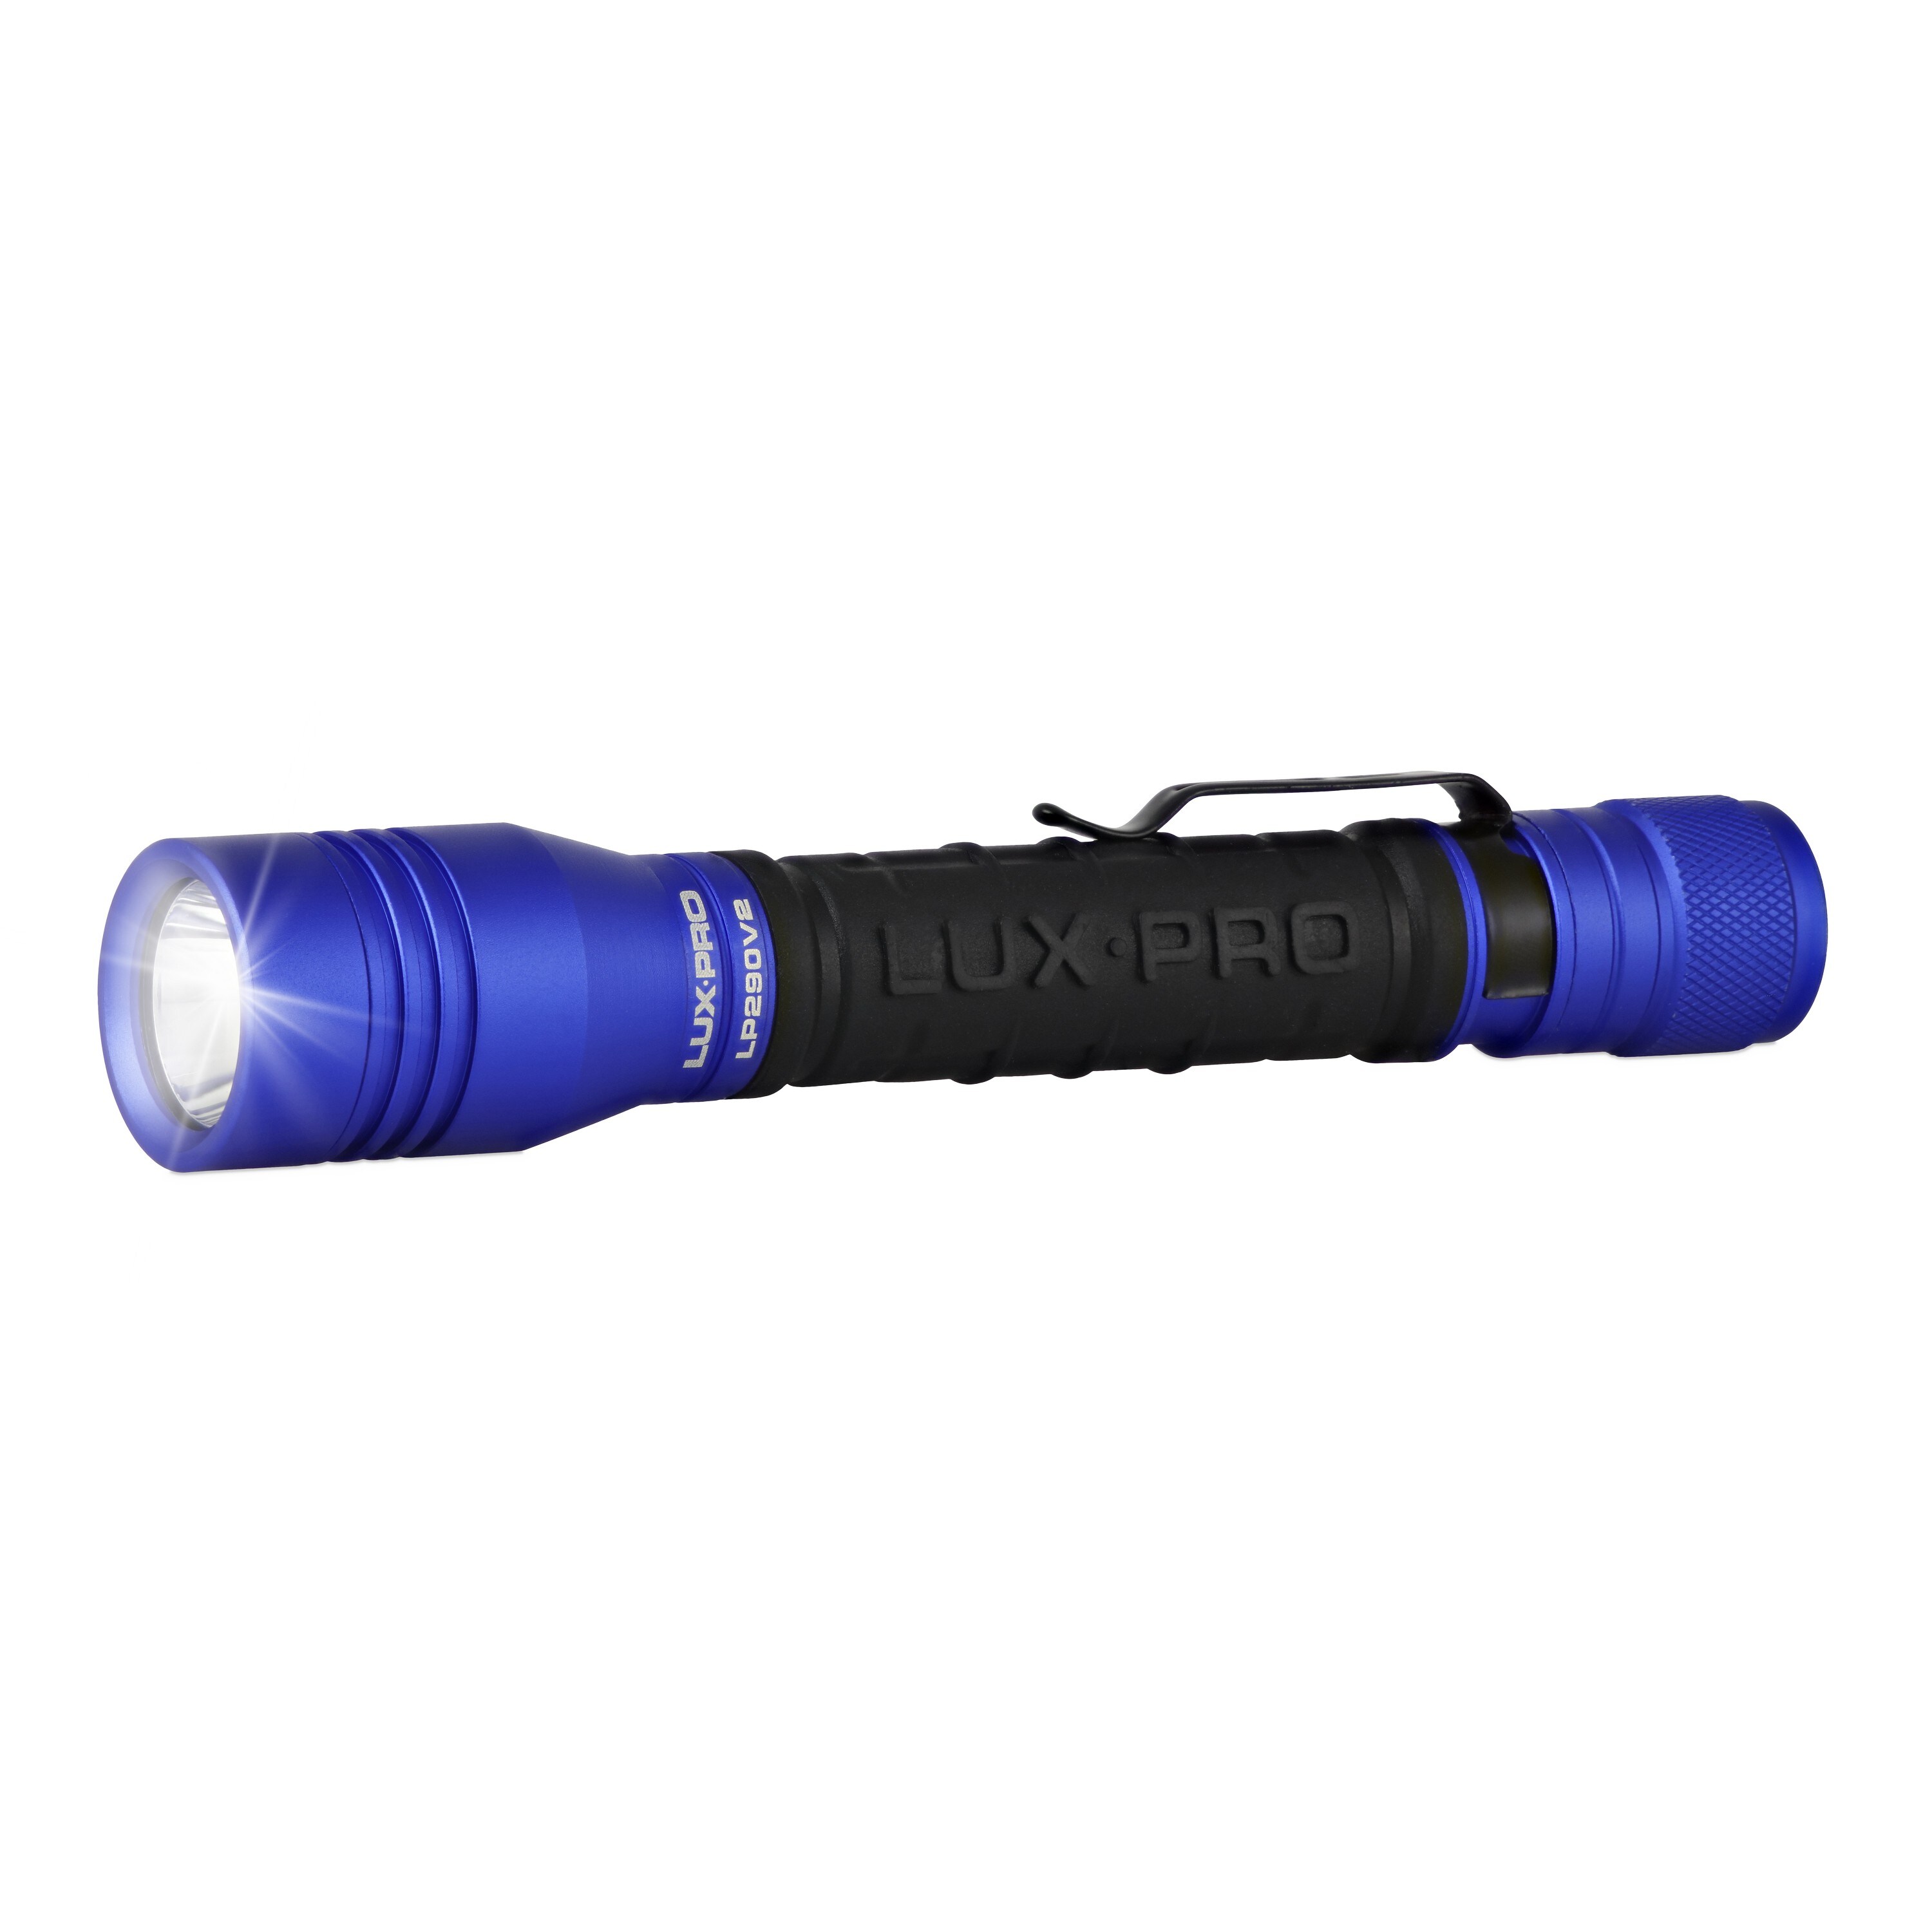 1" Flashlight Bikes Equipment Flashlight Mount Tools for any 1.25" Bar 